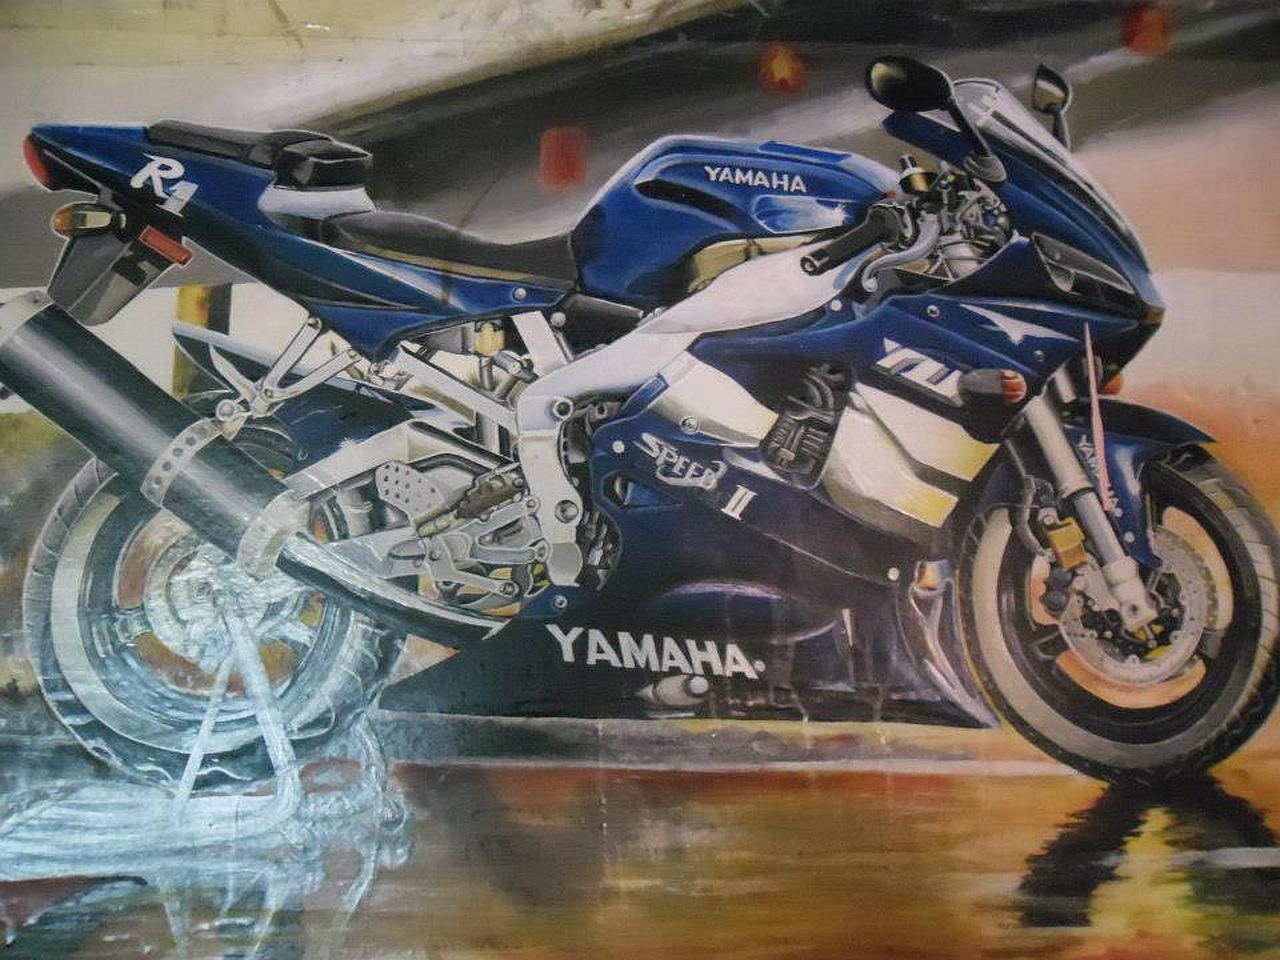 Yamaha Picture